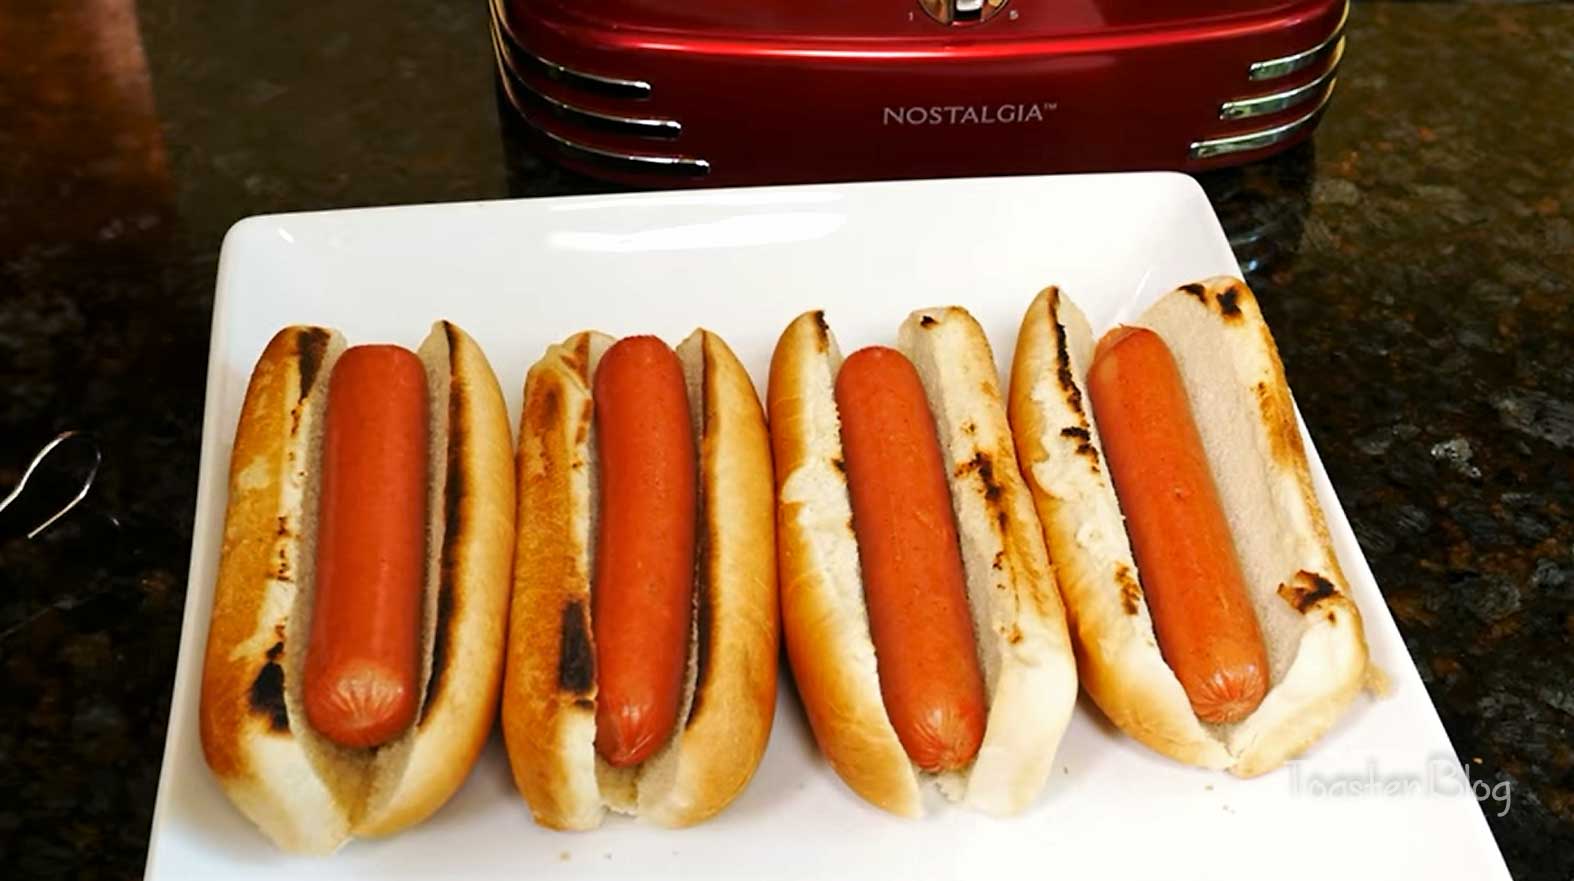 https://toaster.blog/wp-content/uploads/Best-pop-up-hot-dog-toaster.jpg